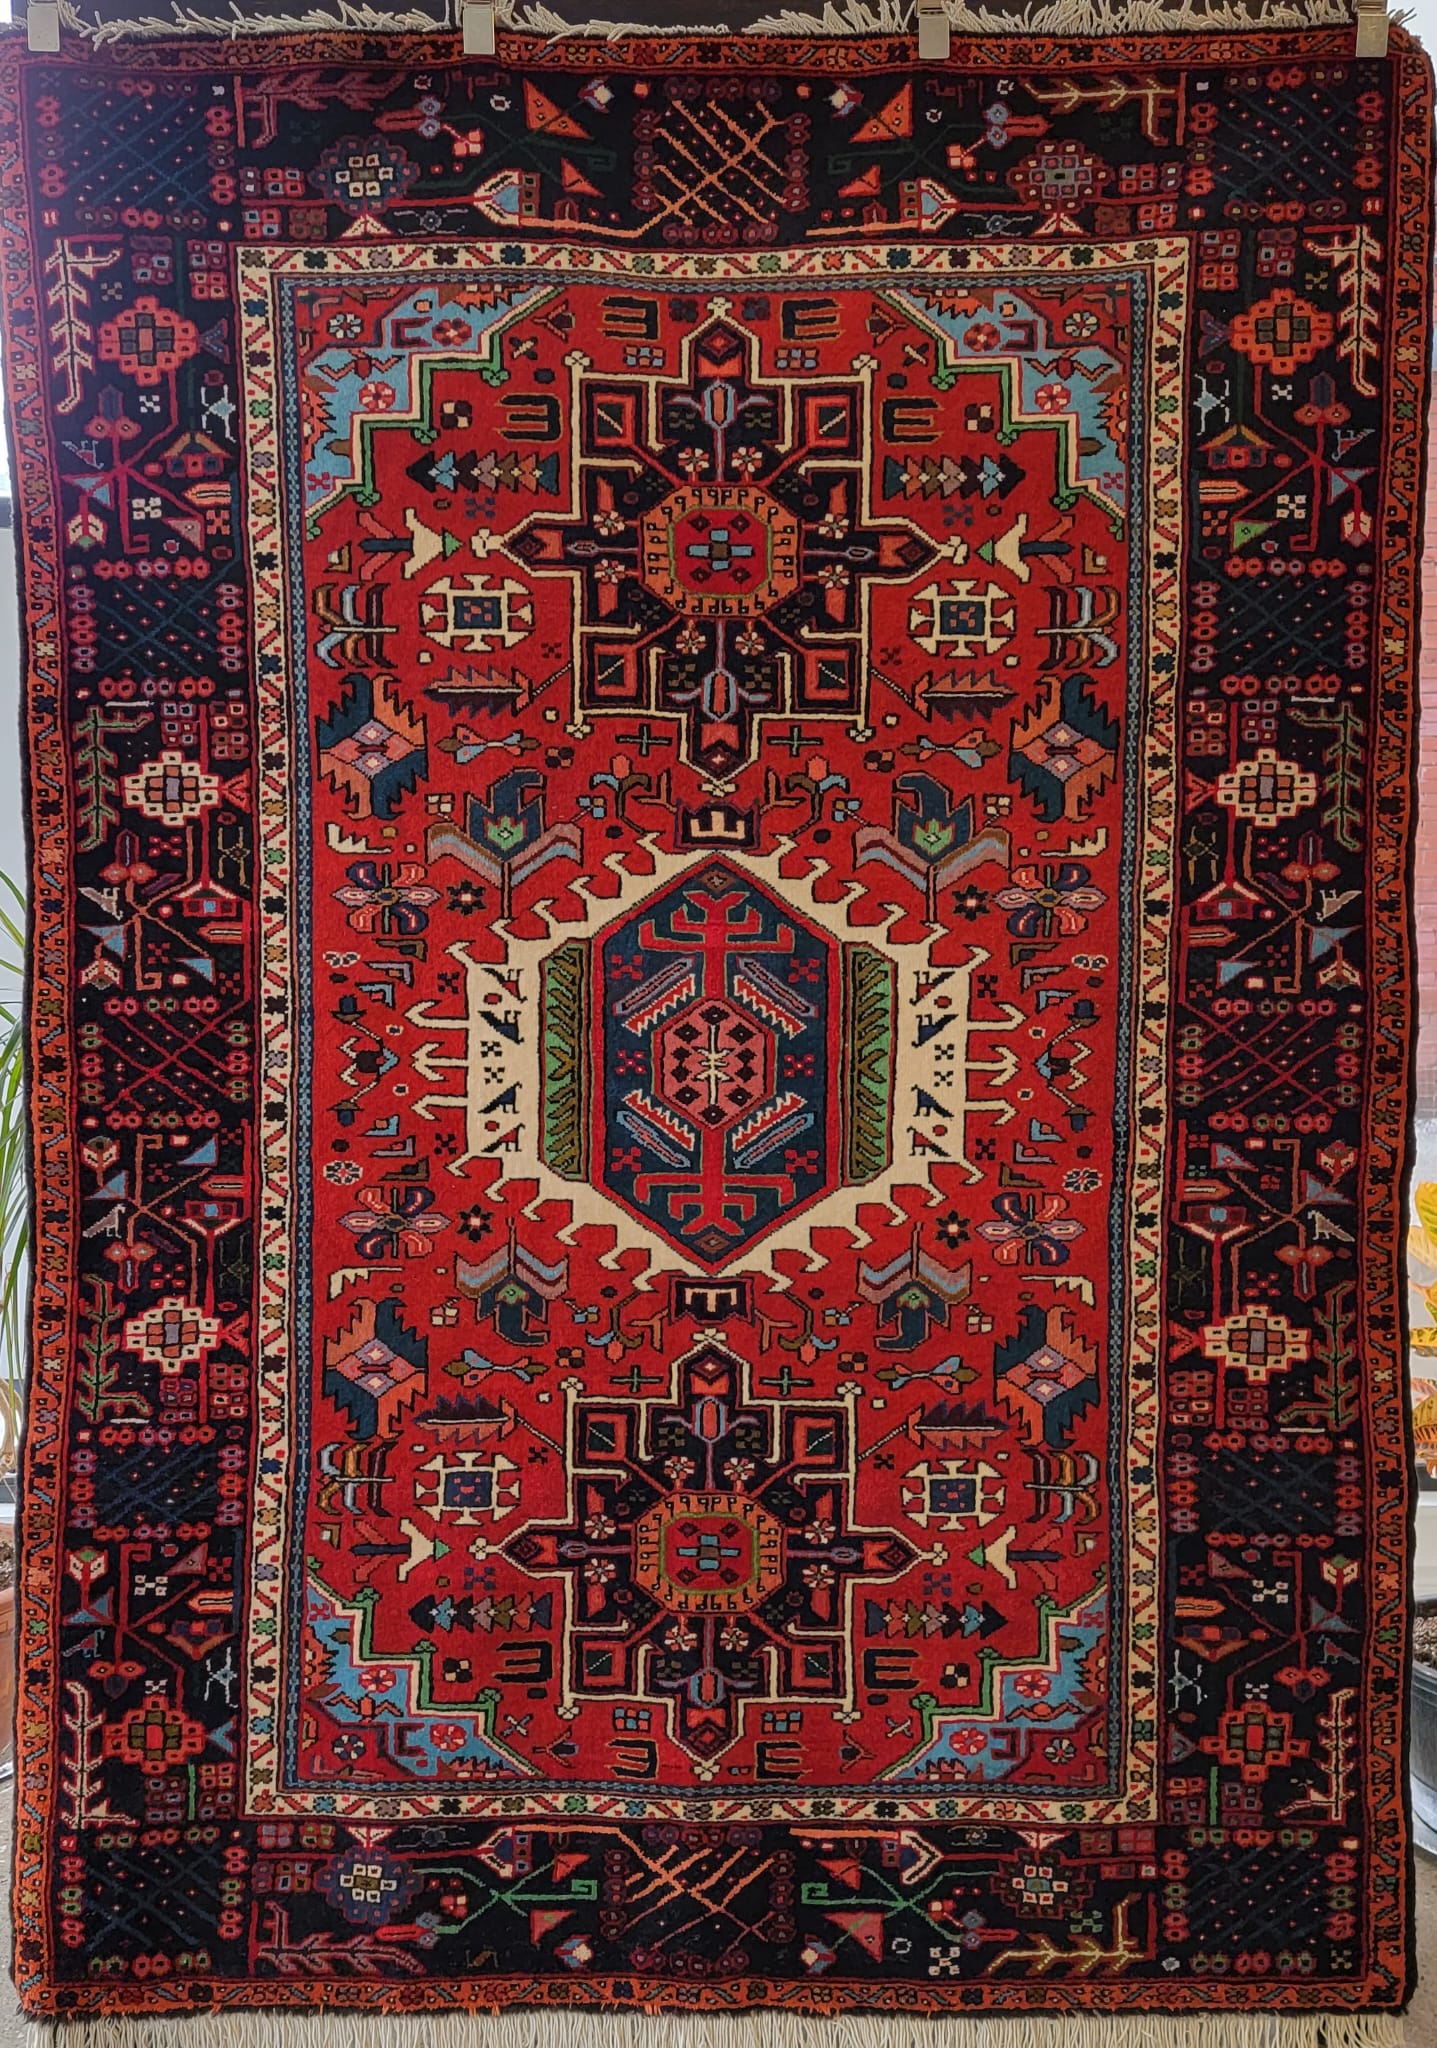 https://emperorrugs.com/wp-content/uploads/2022/08/Gharajeh-Fine-Wool-Handmade-Persian-Rug.jpeg